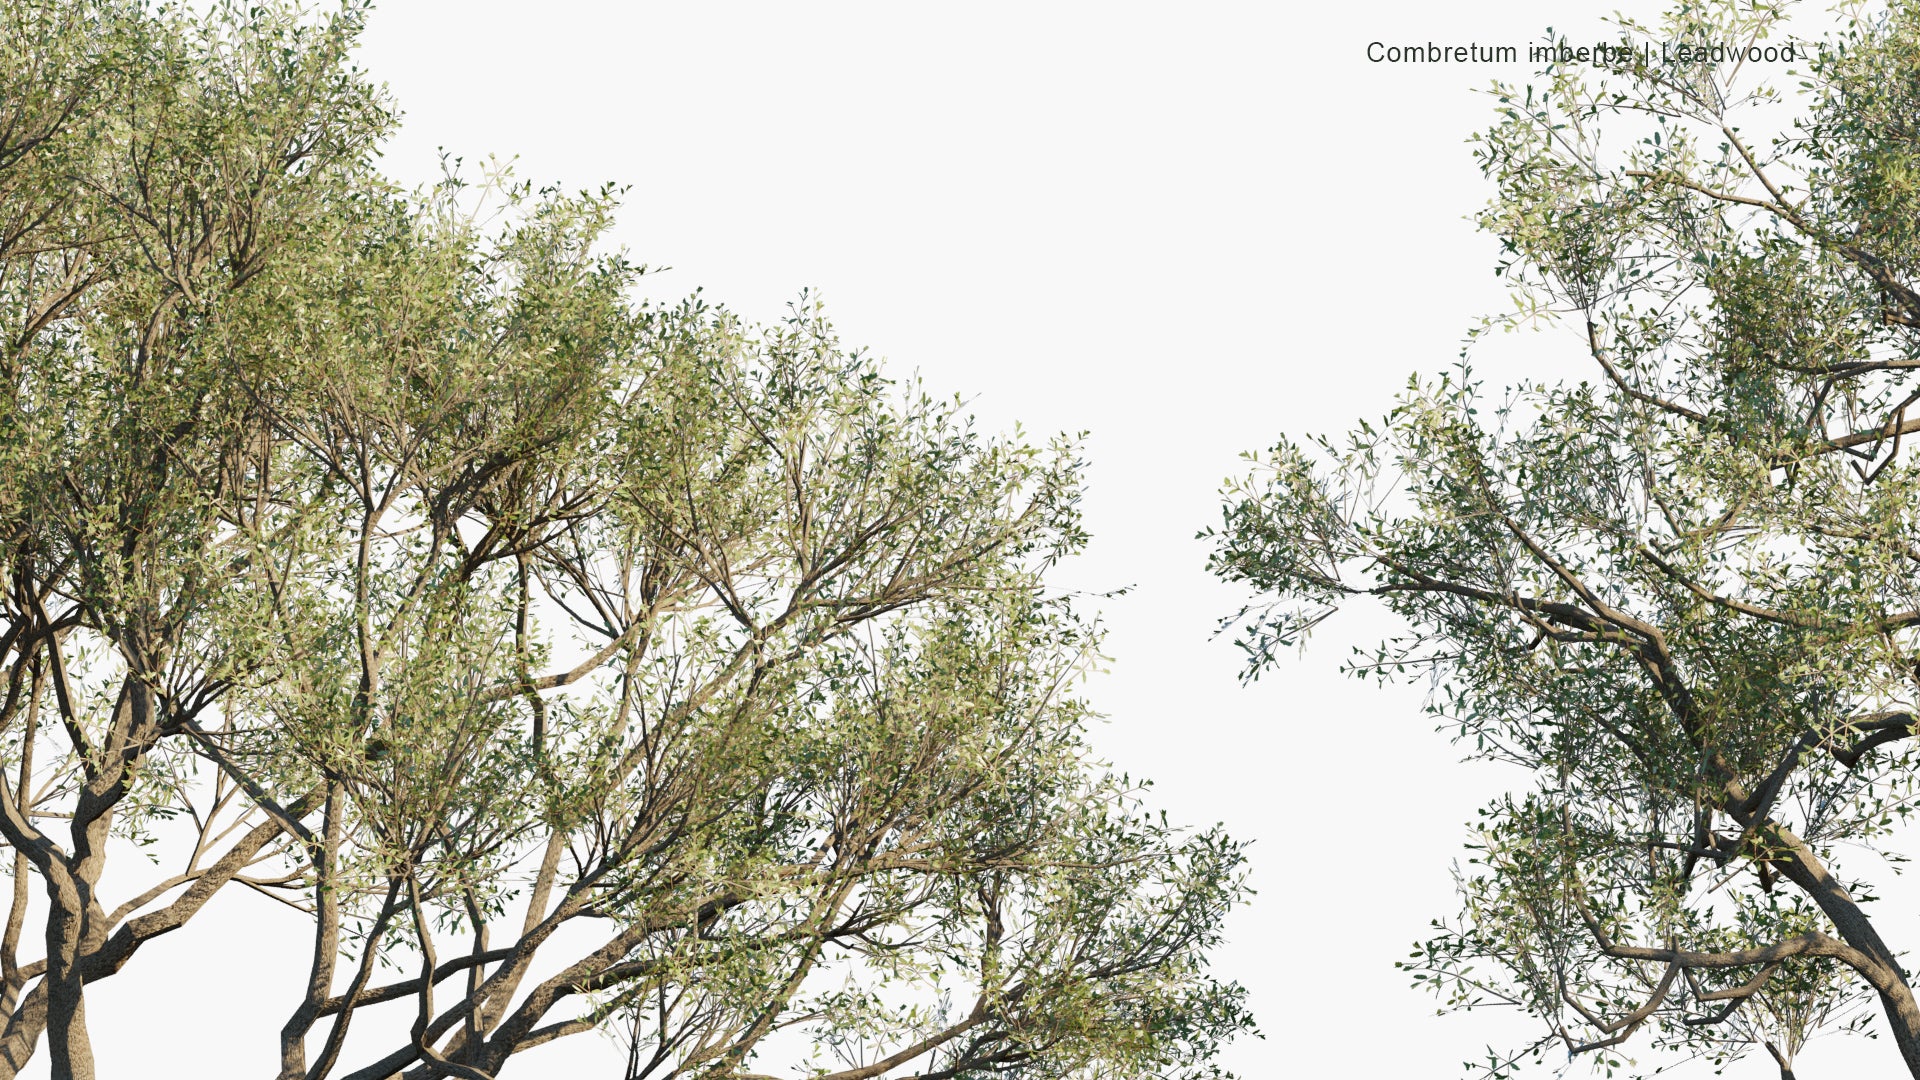 Low Poly Combretum Imberbe - Leadwood, Mhoba-Hoba (3D Model)